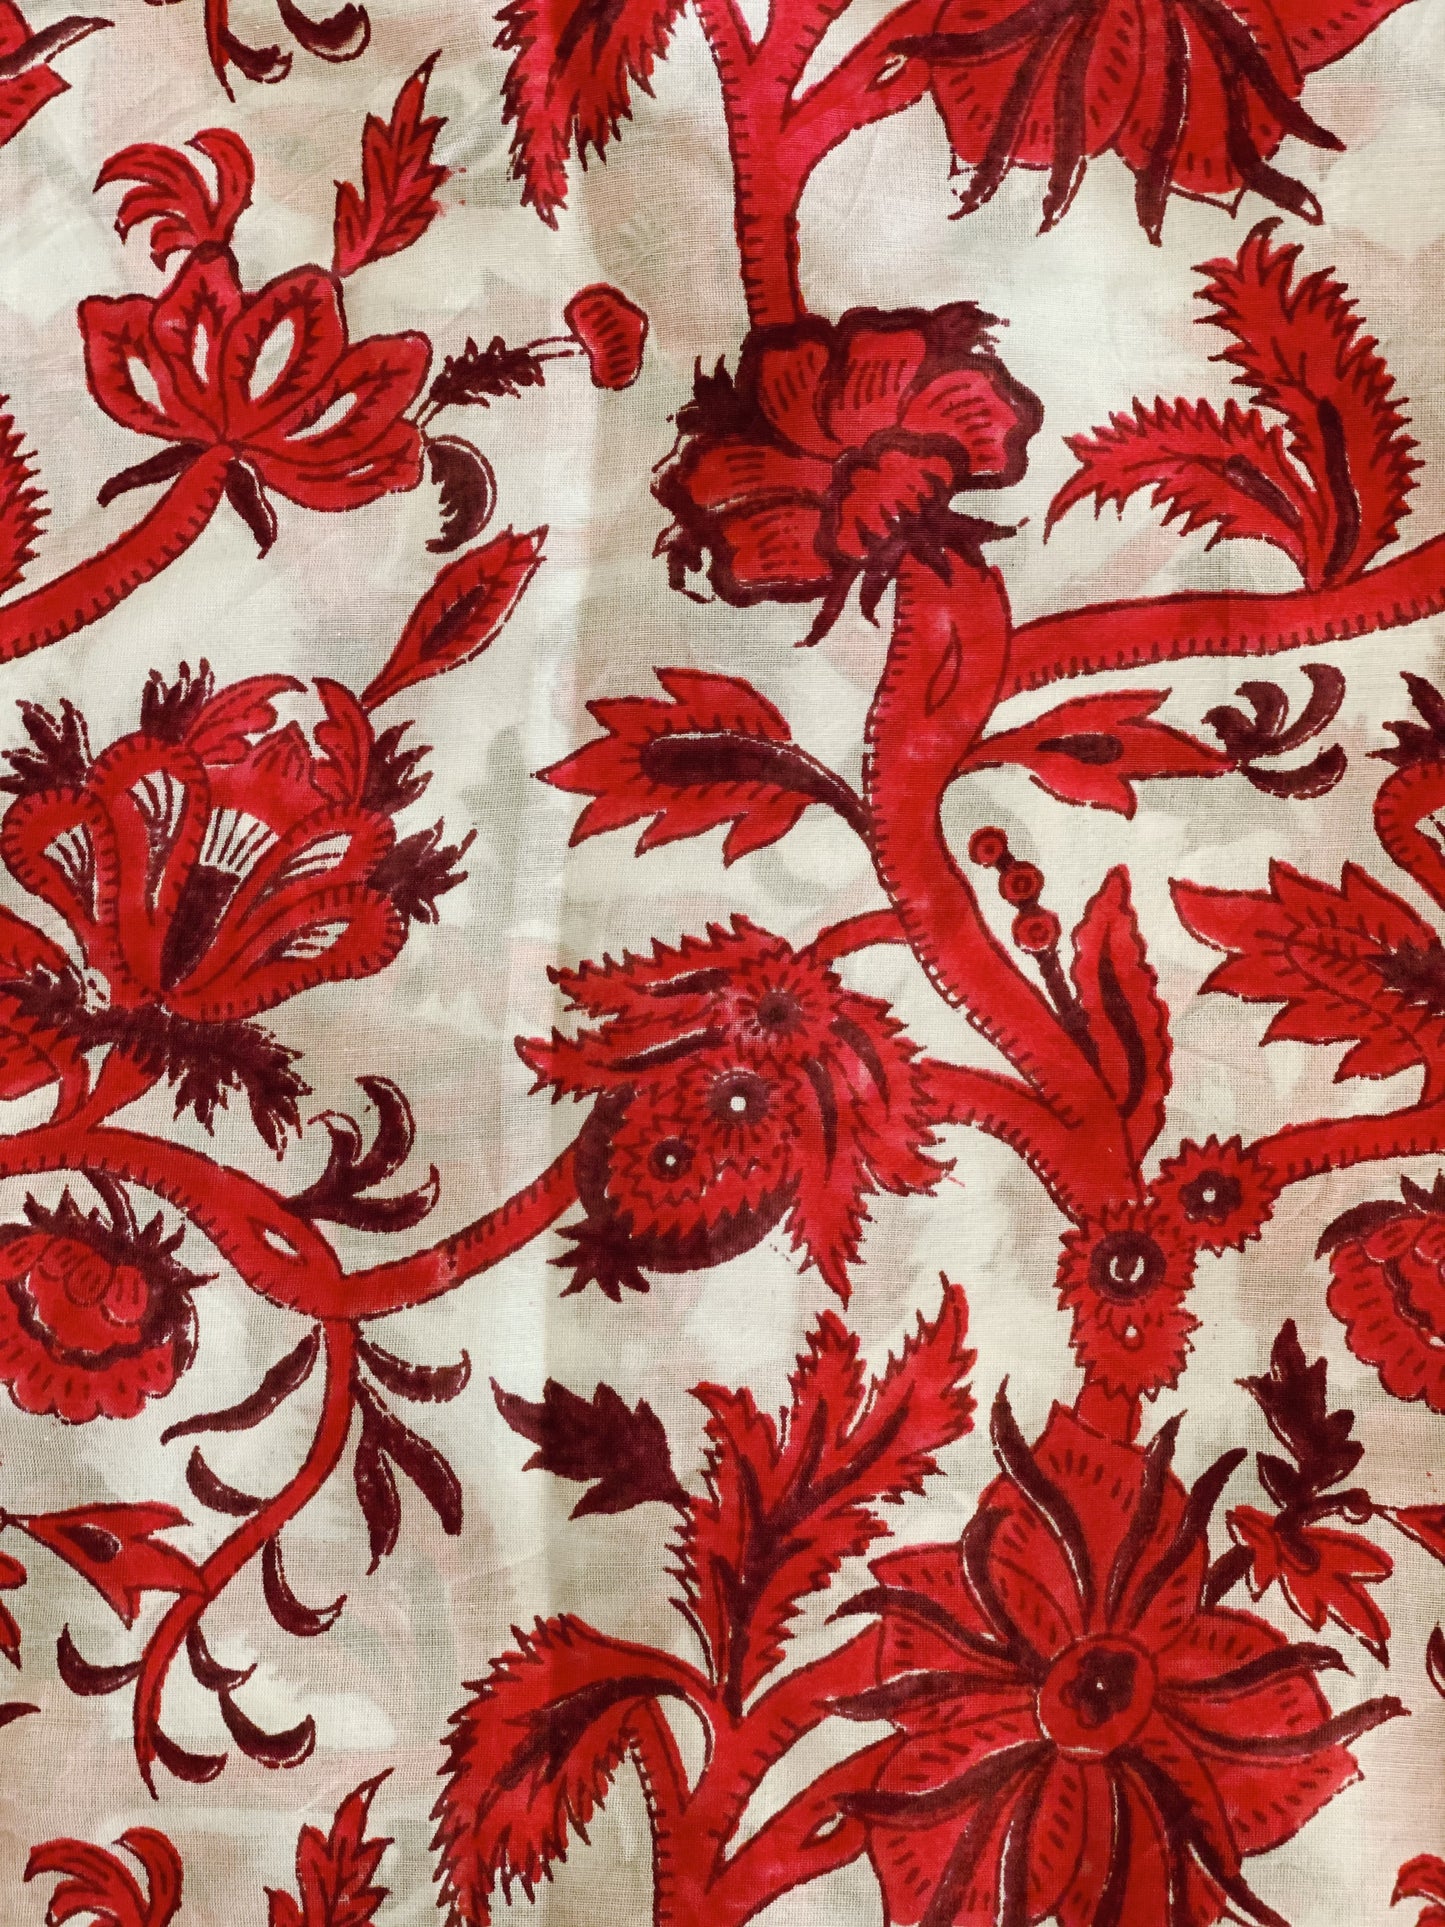 Georgia Dress - Red silk